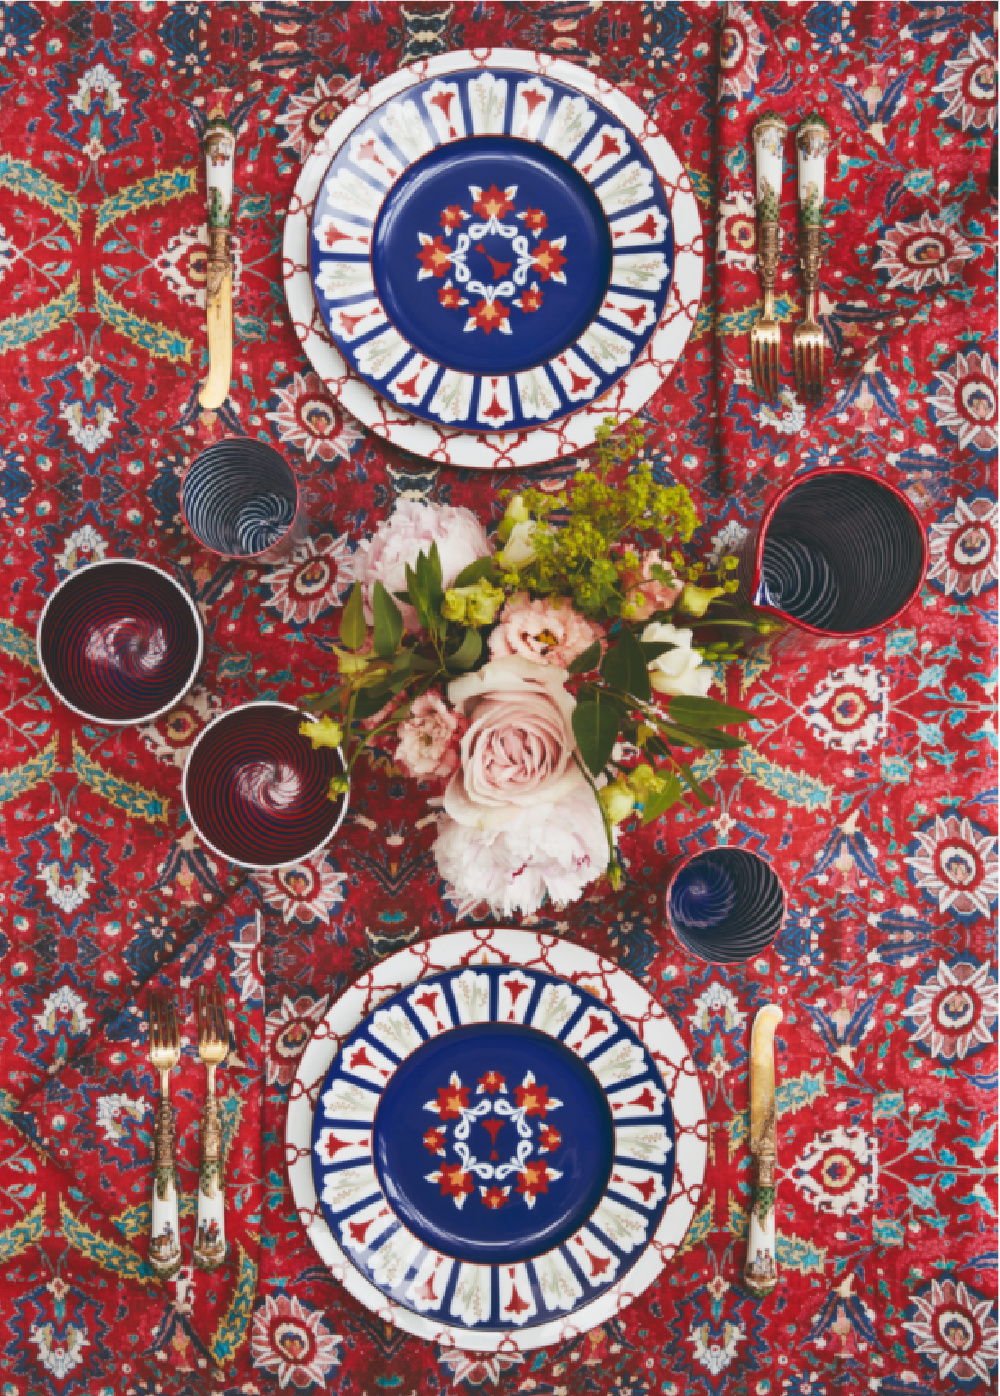 Blue, red, and white Persia linens from CASA CABANA - Martina Mondadori. #tablescapes #redwhiteblue